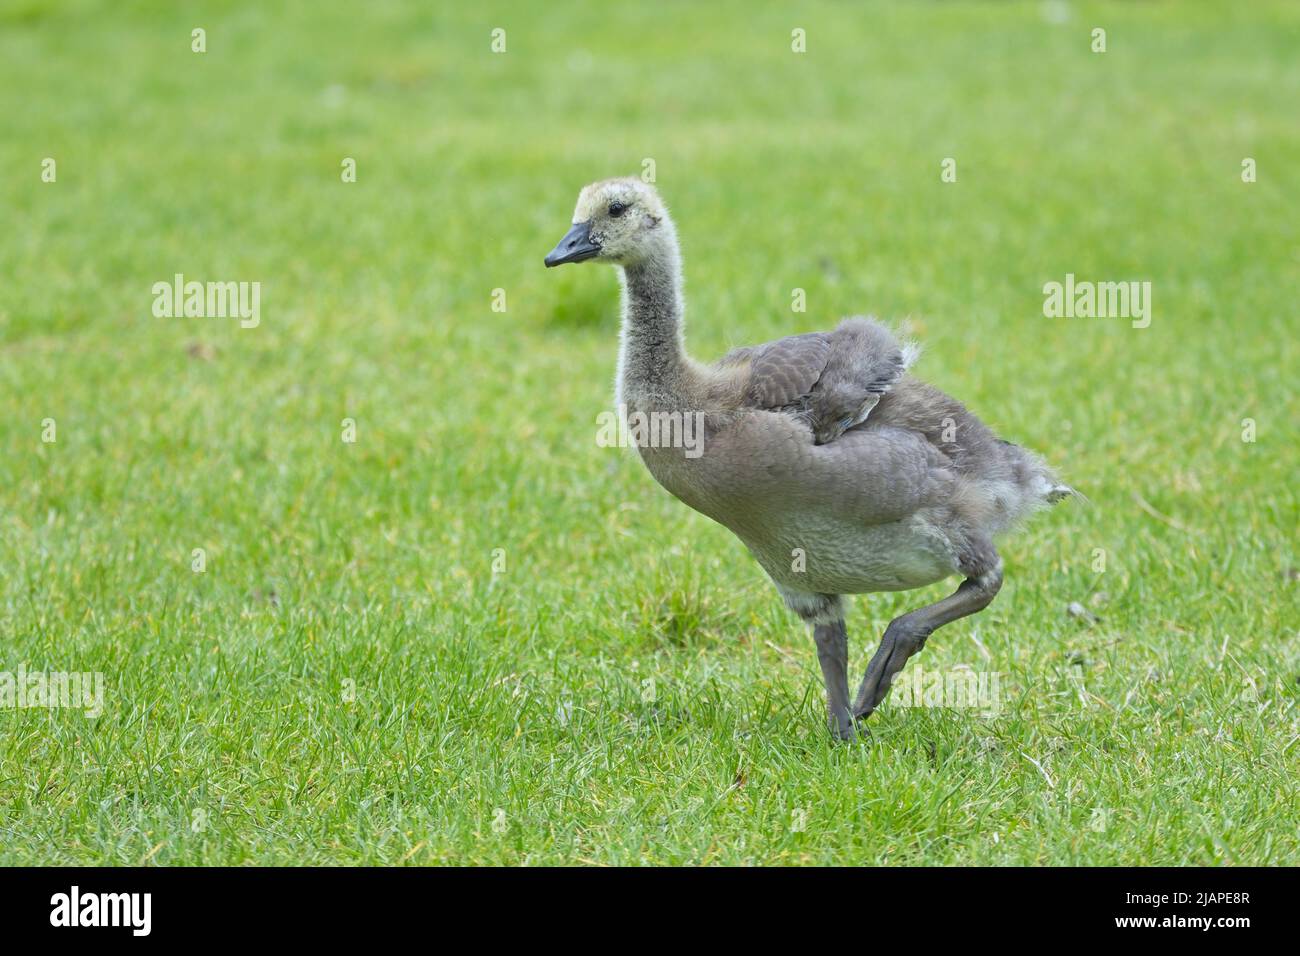 An older gosling walks through the gras in Manito Park in Spokane, Washington. Stock Photo